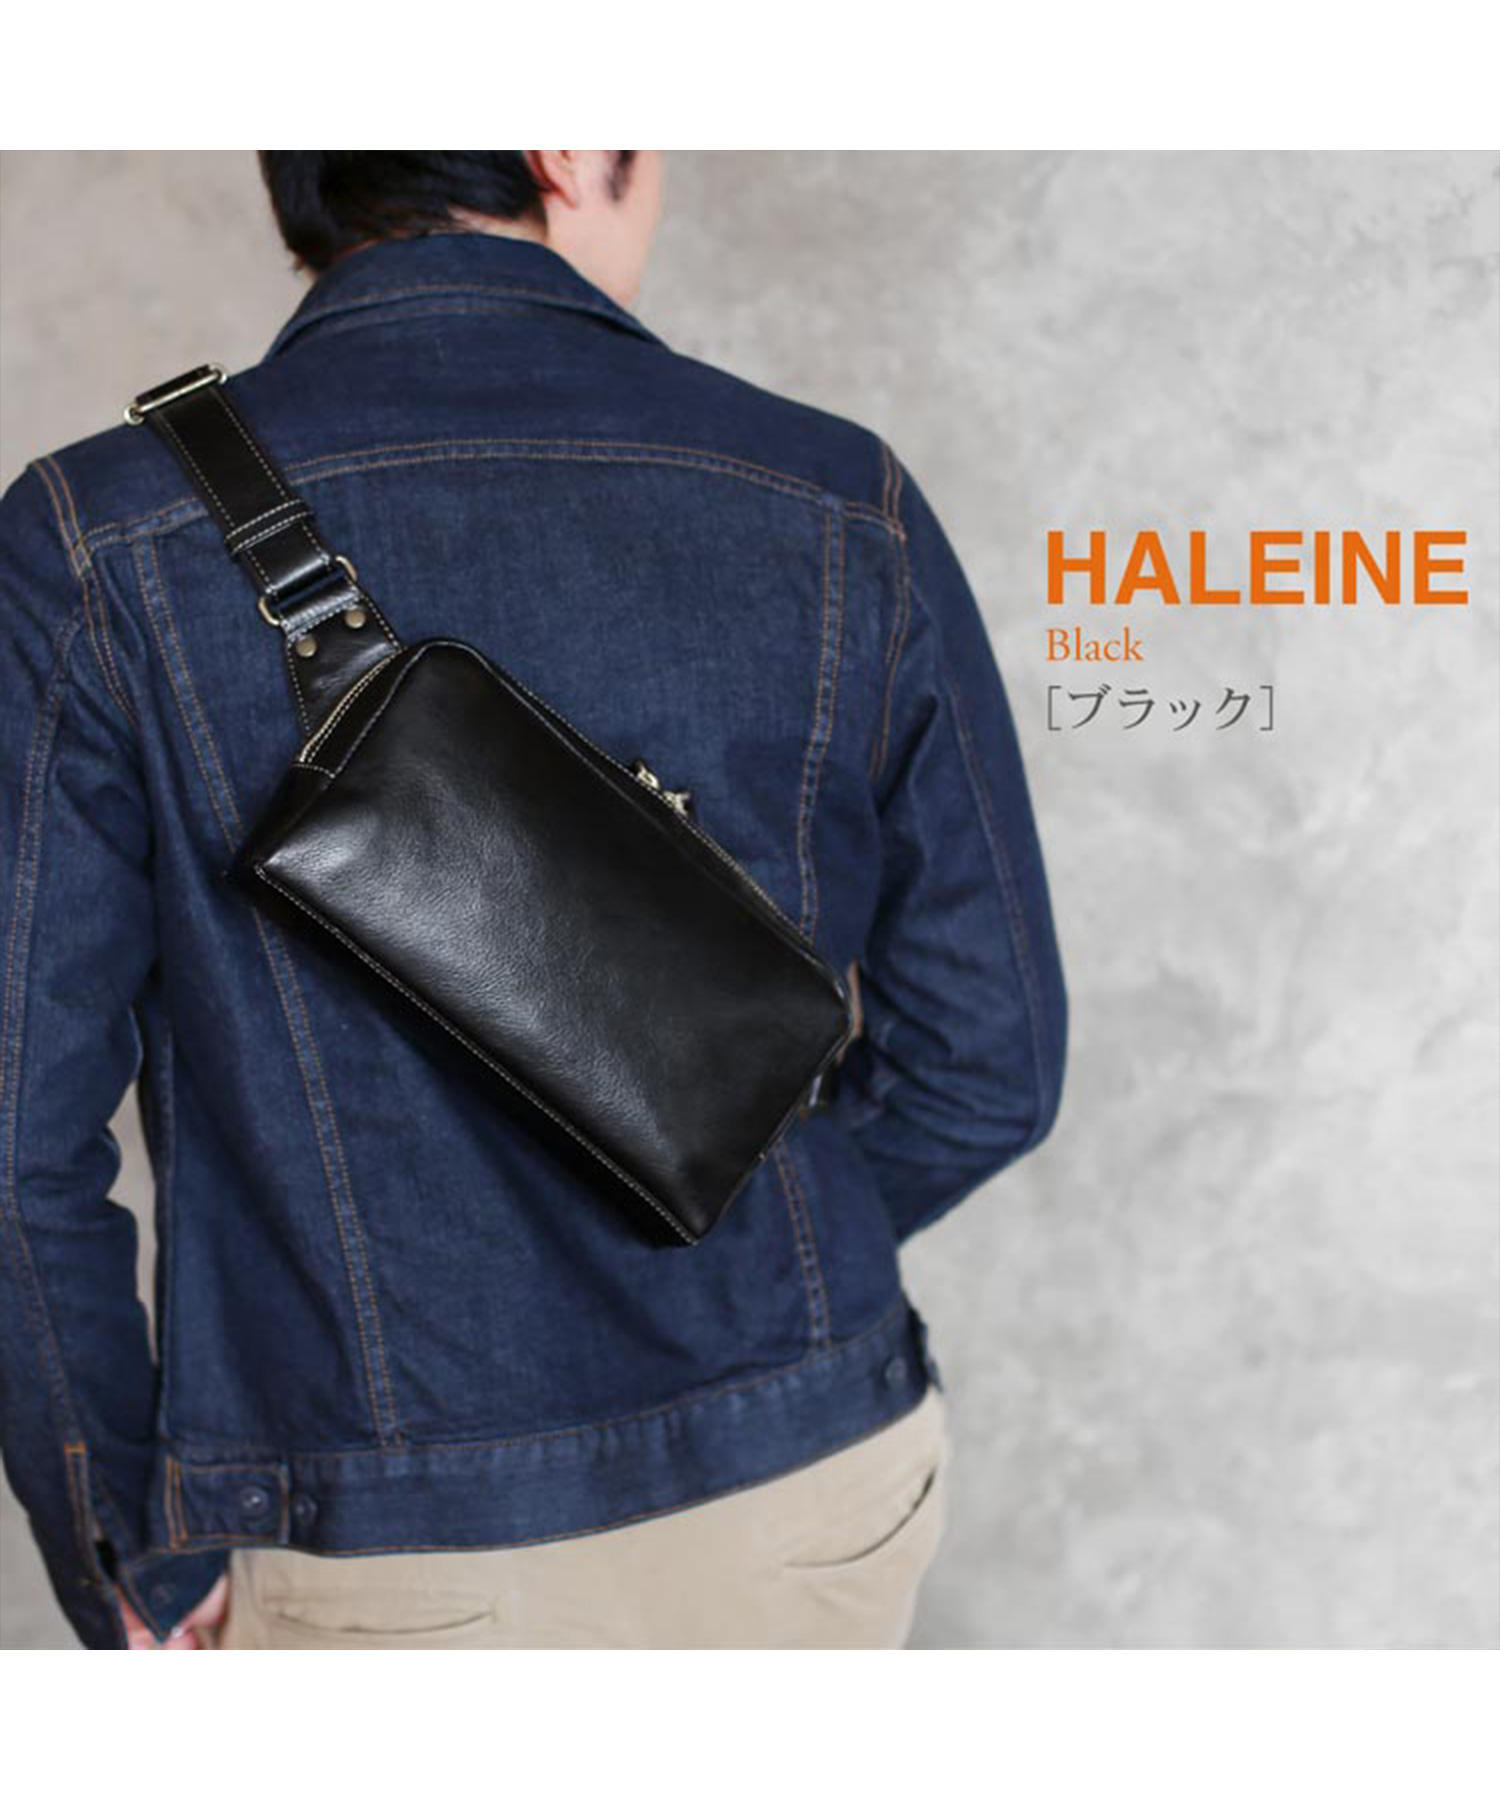 HALEINE]牛革ボディバッグ日本製(502832395) | アレンヌ(HALEINE) - d